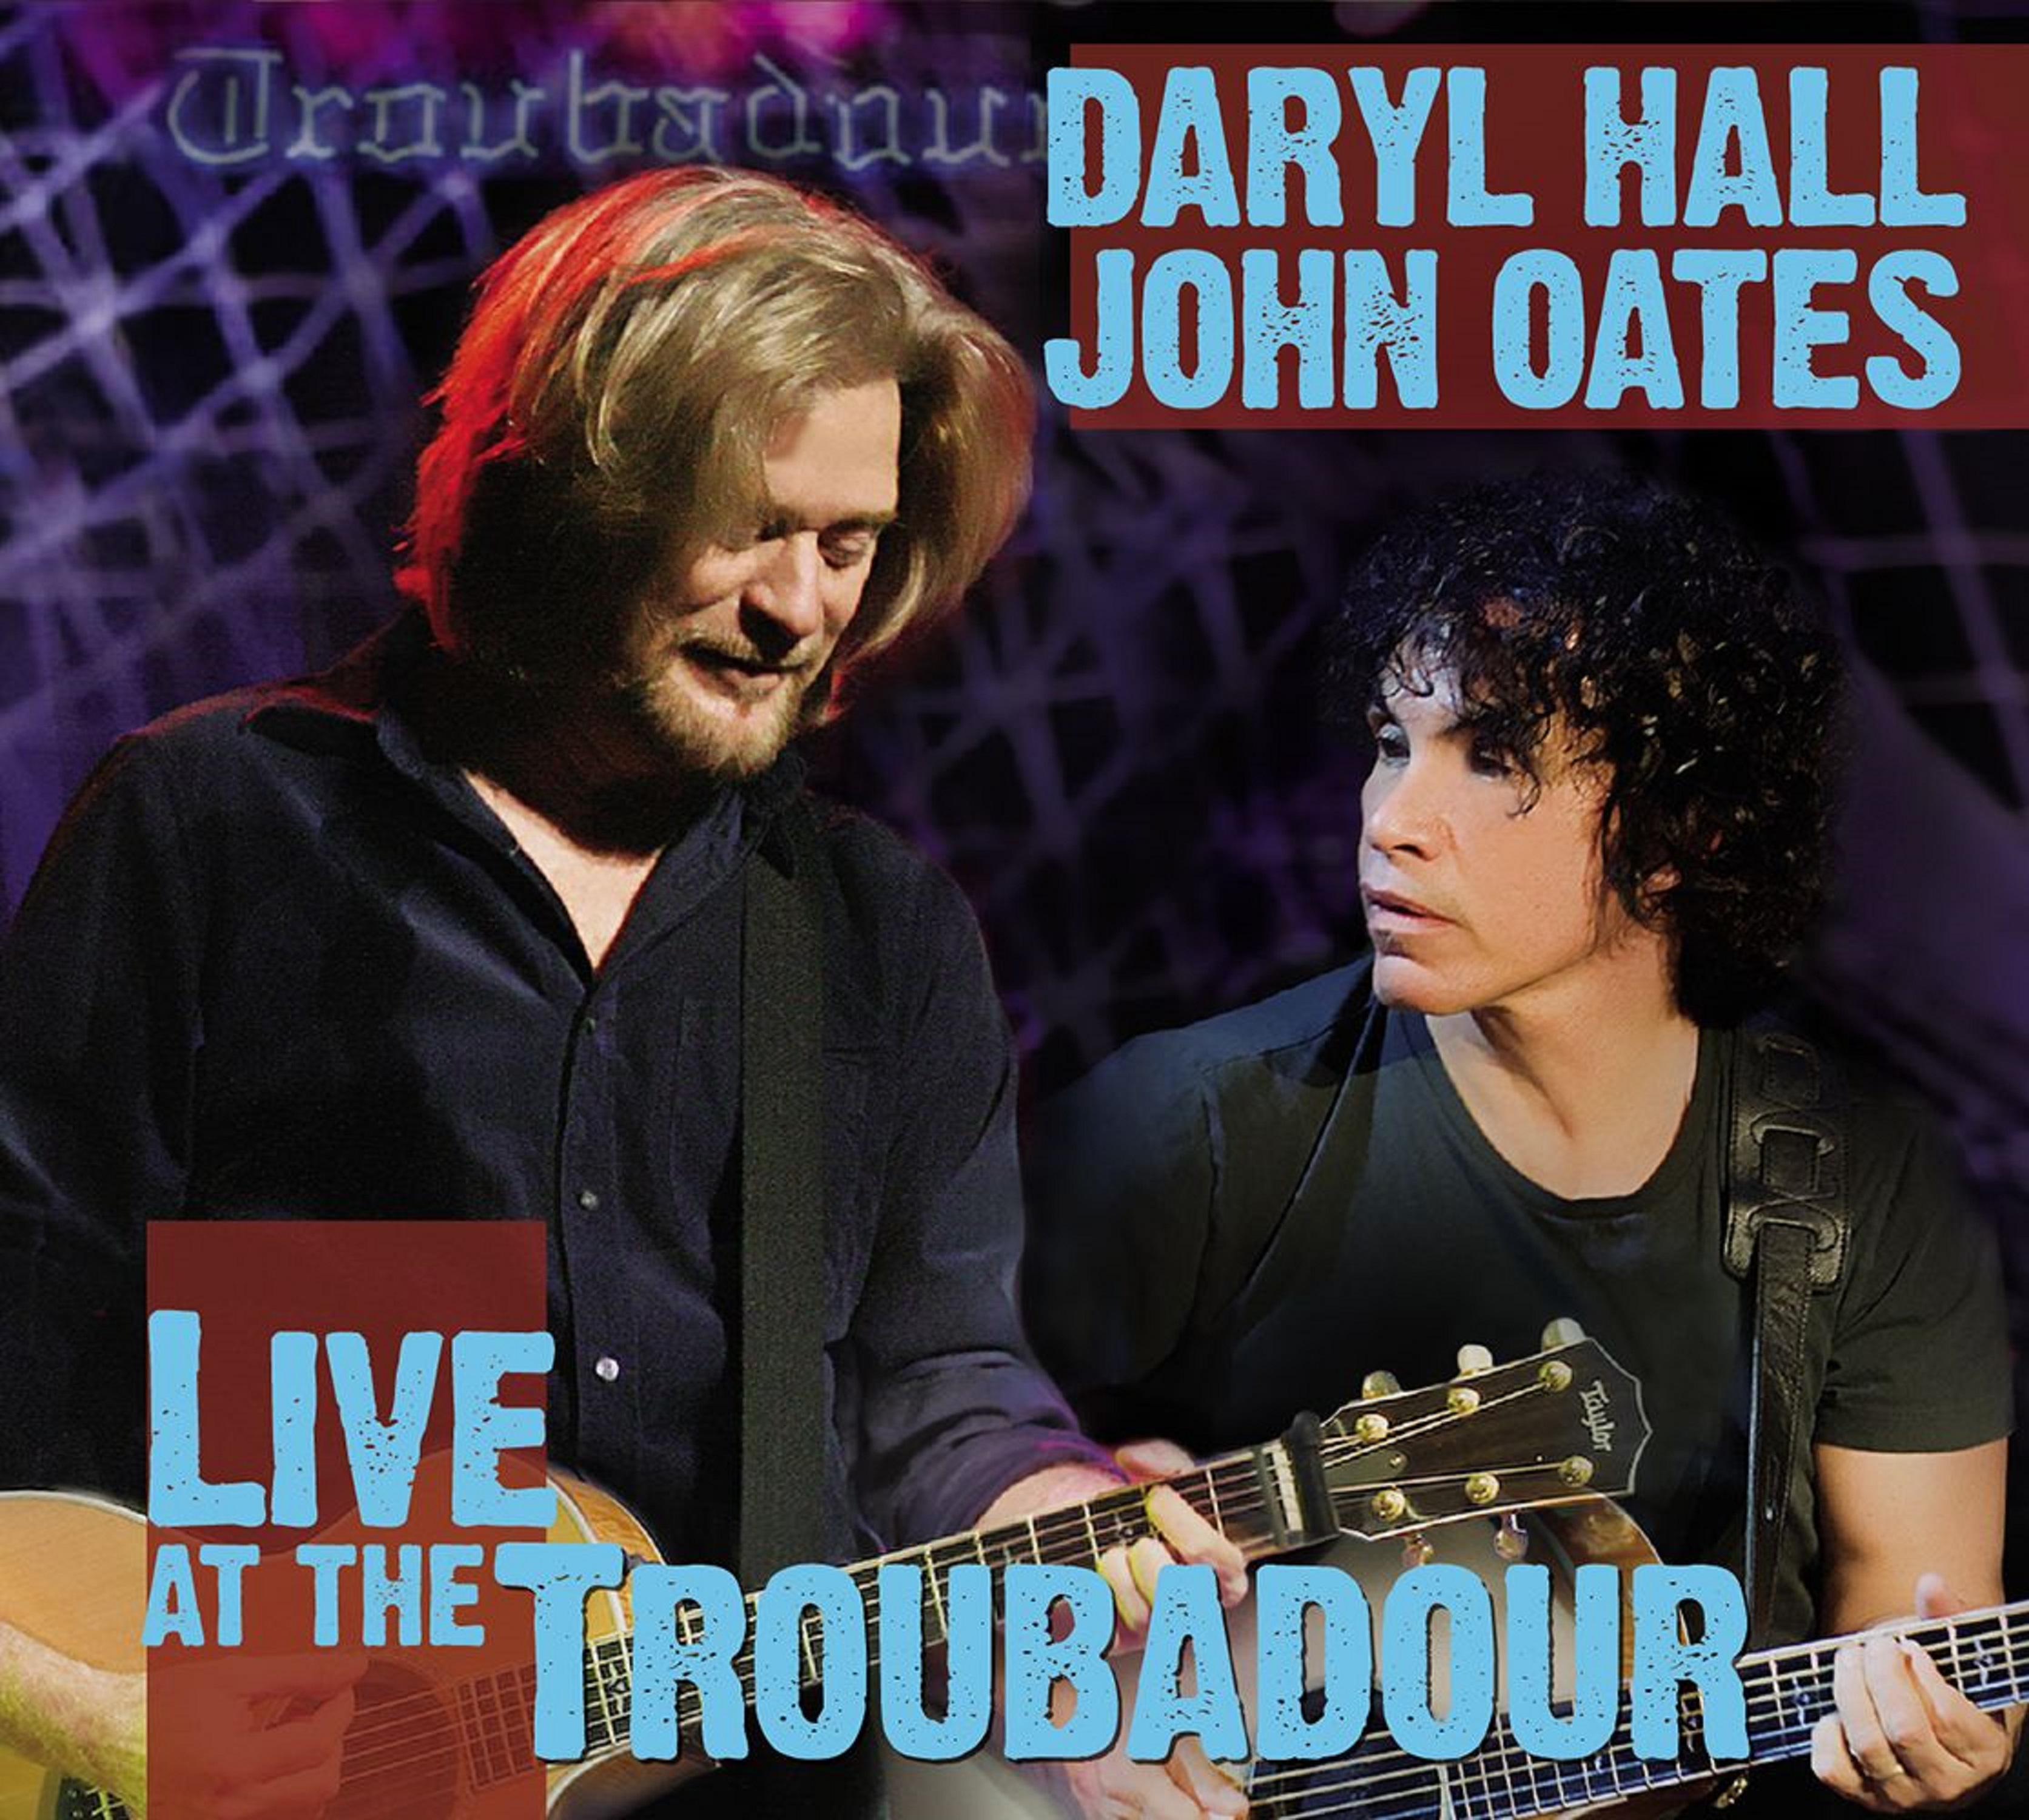 Daryl Hall & John Oates "Live At The Troubadour"